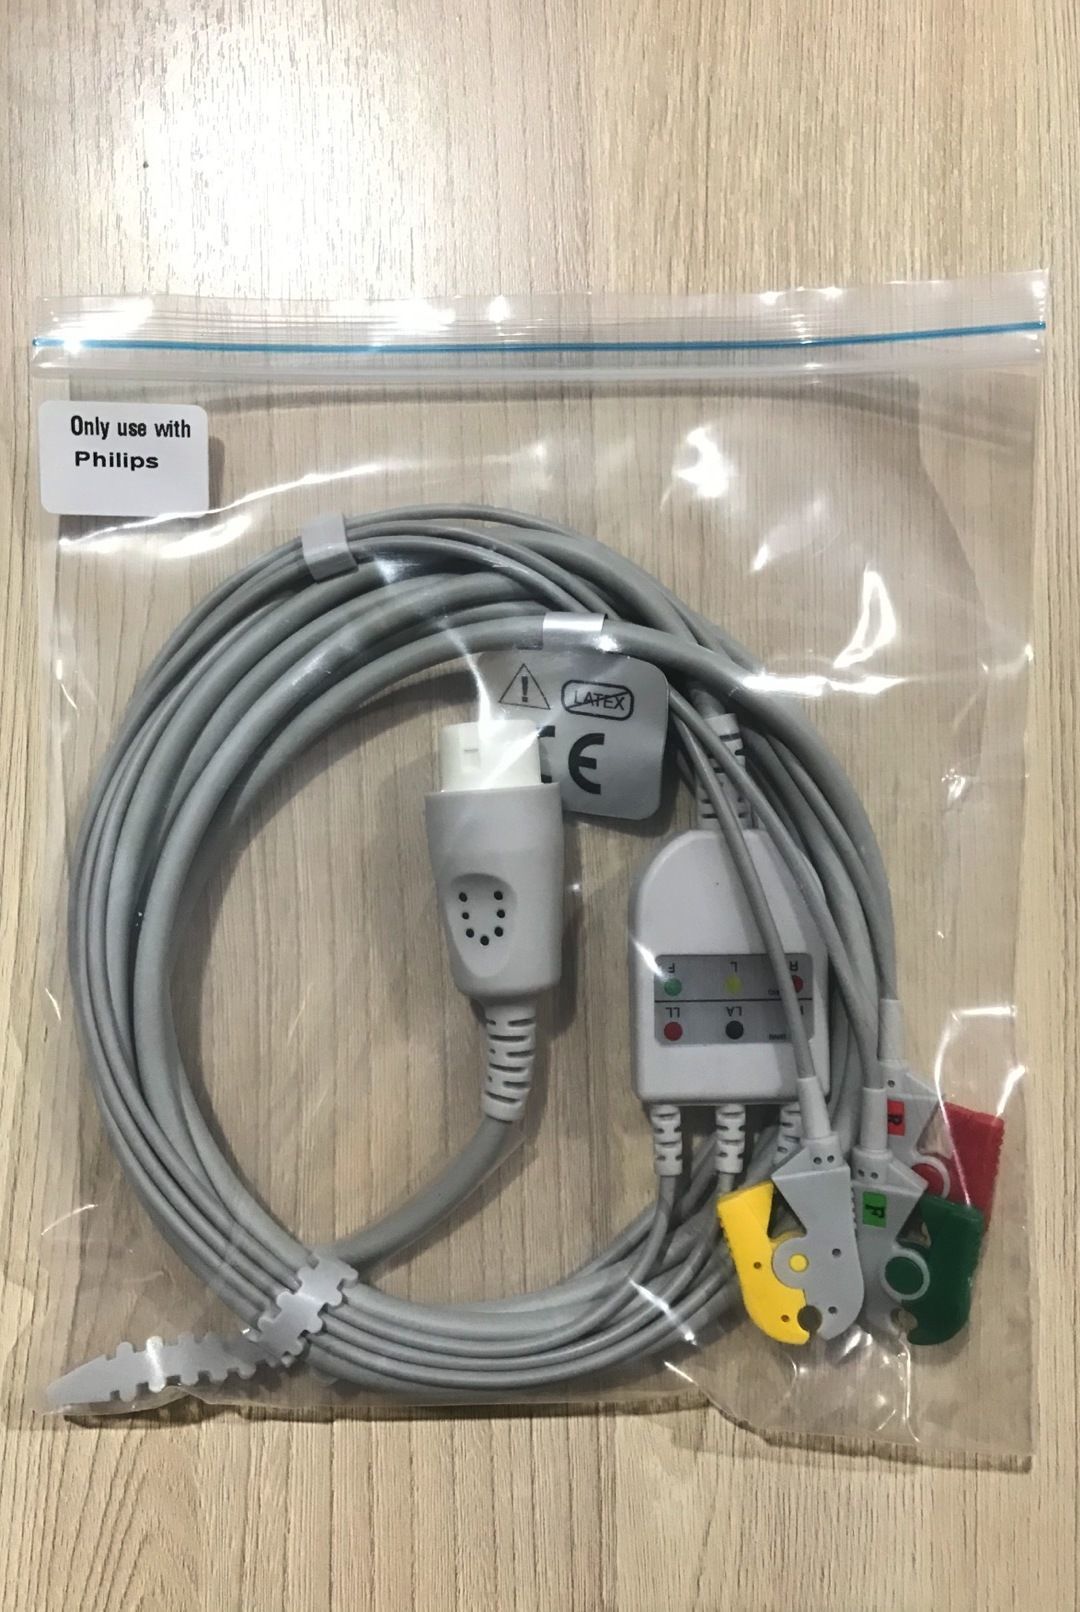 ECG 3 lead clip cable for Defibrillator Philips DFM100_สายอีซีจีเคเบิ้ลสำหรับเครื่องดีฟิบริลเลเตอร์ฟิลิปส์รุ่น DFM100